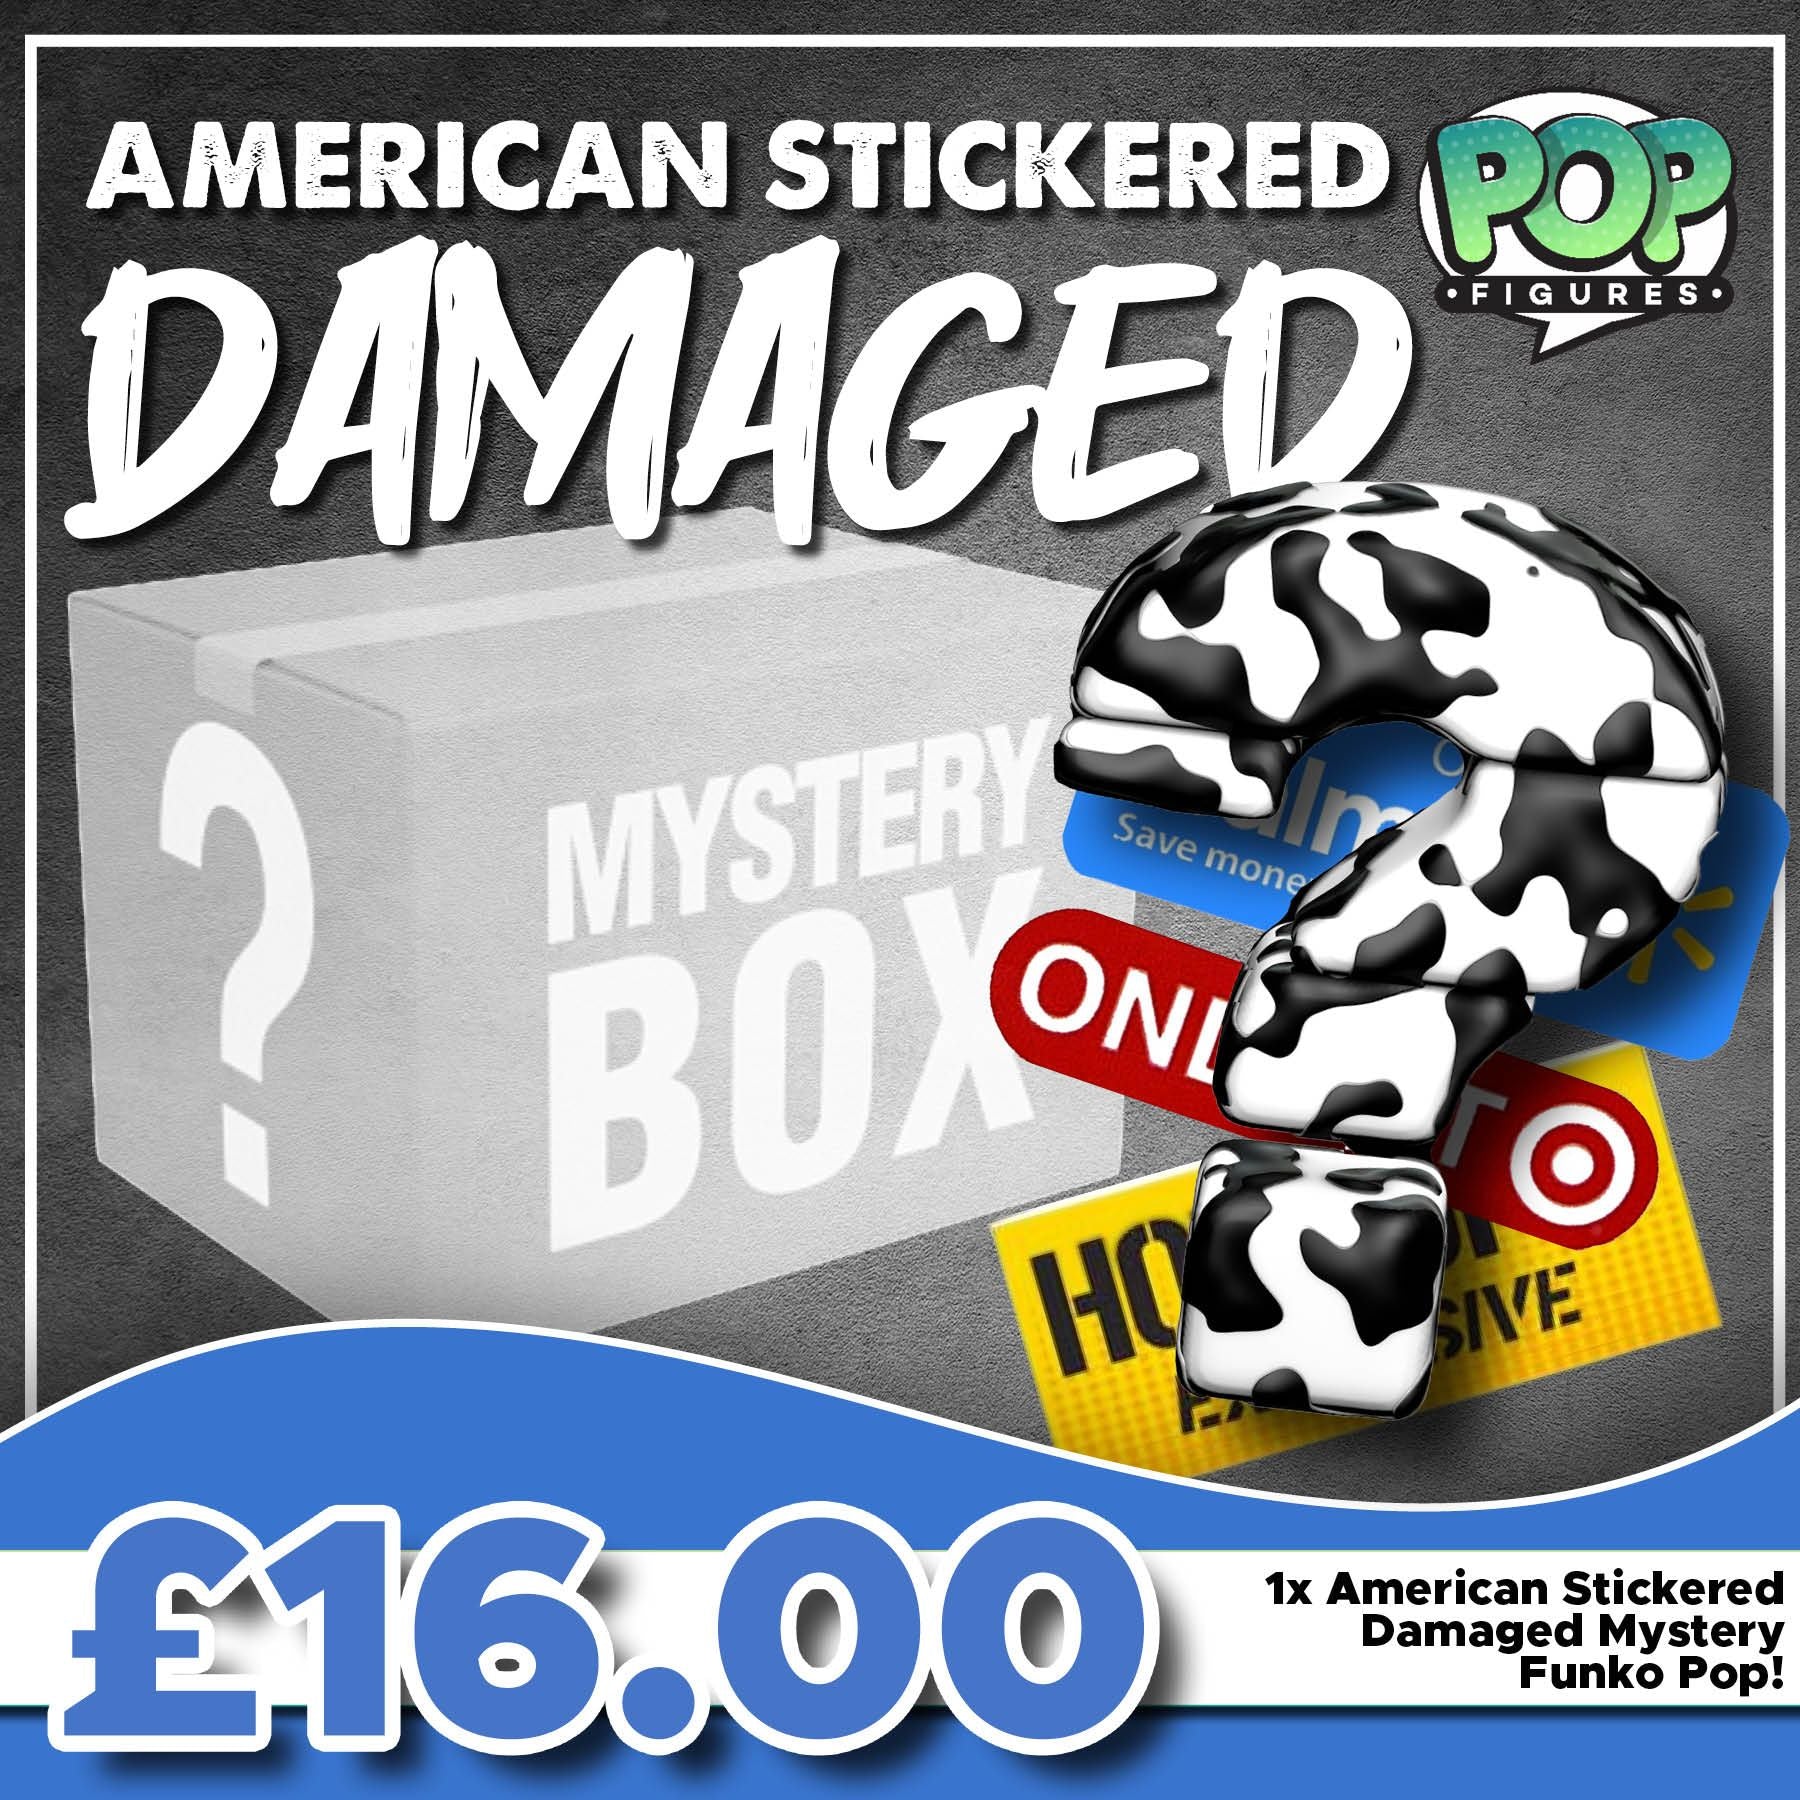 1 x American Stickered Damage Mystery Funko Pop